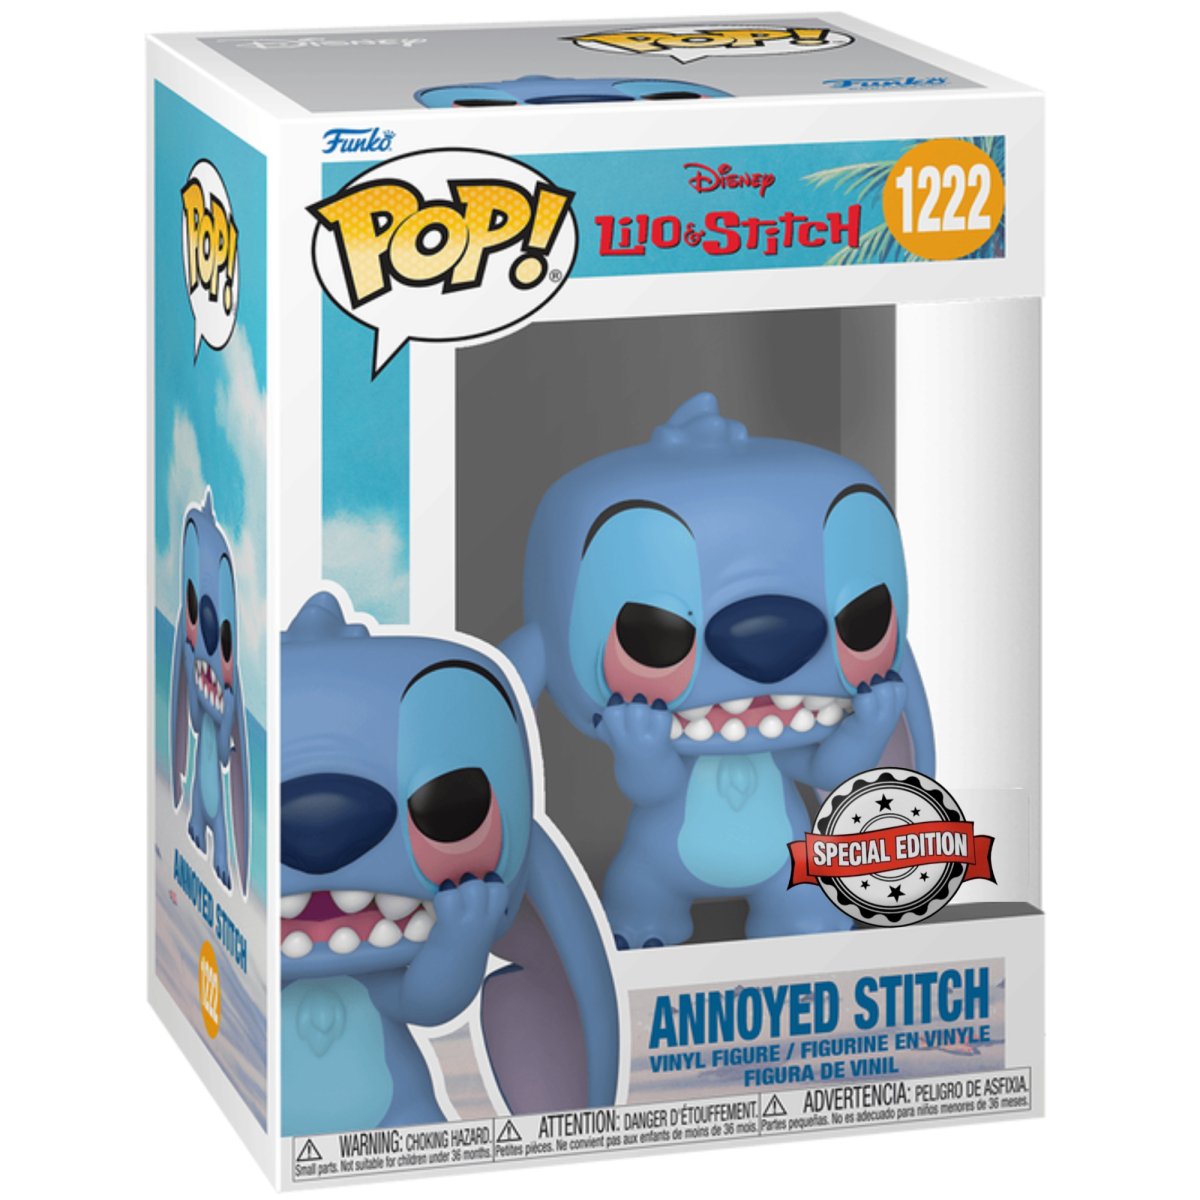 Lilo & Stitch - Annoyed Stitch (Special Edition) #1222 - Funko Pop! Vinyl Disney - Persona Toys